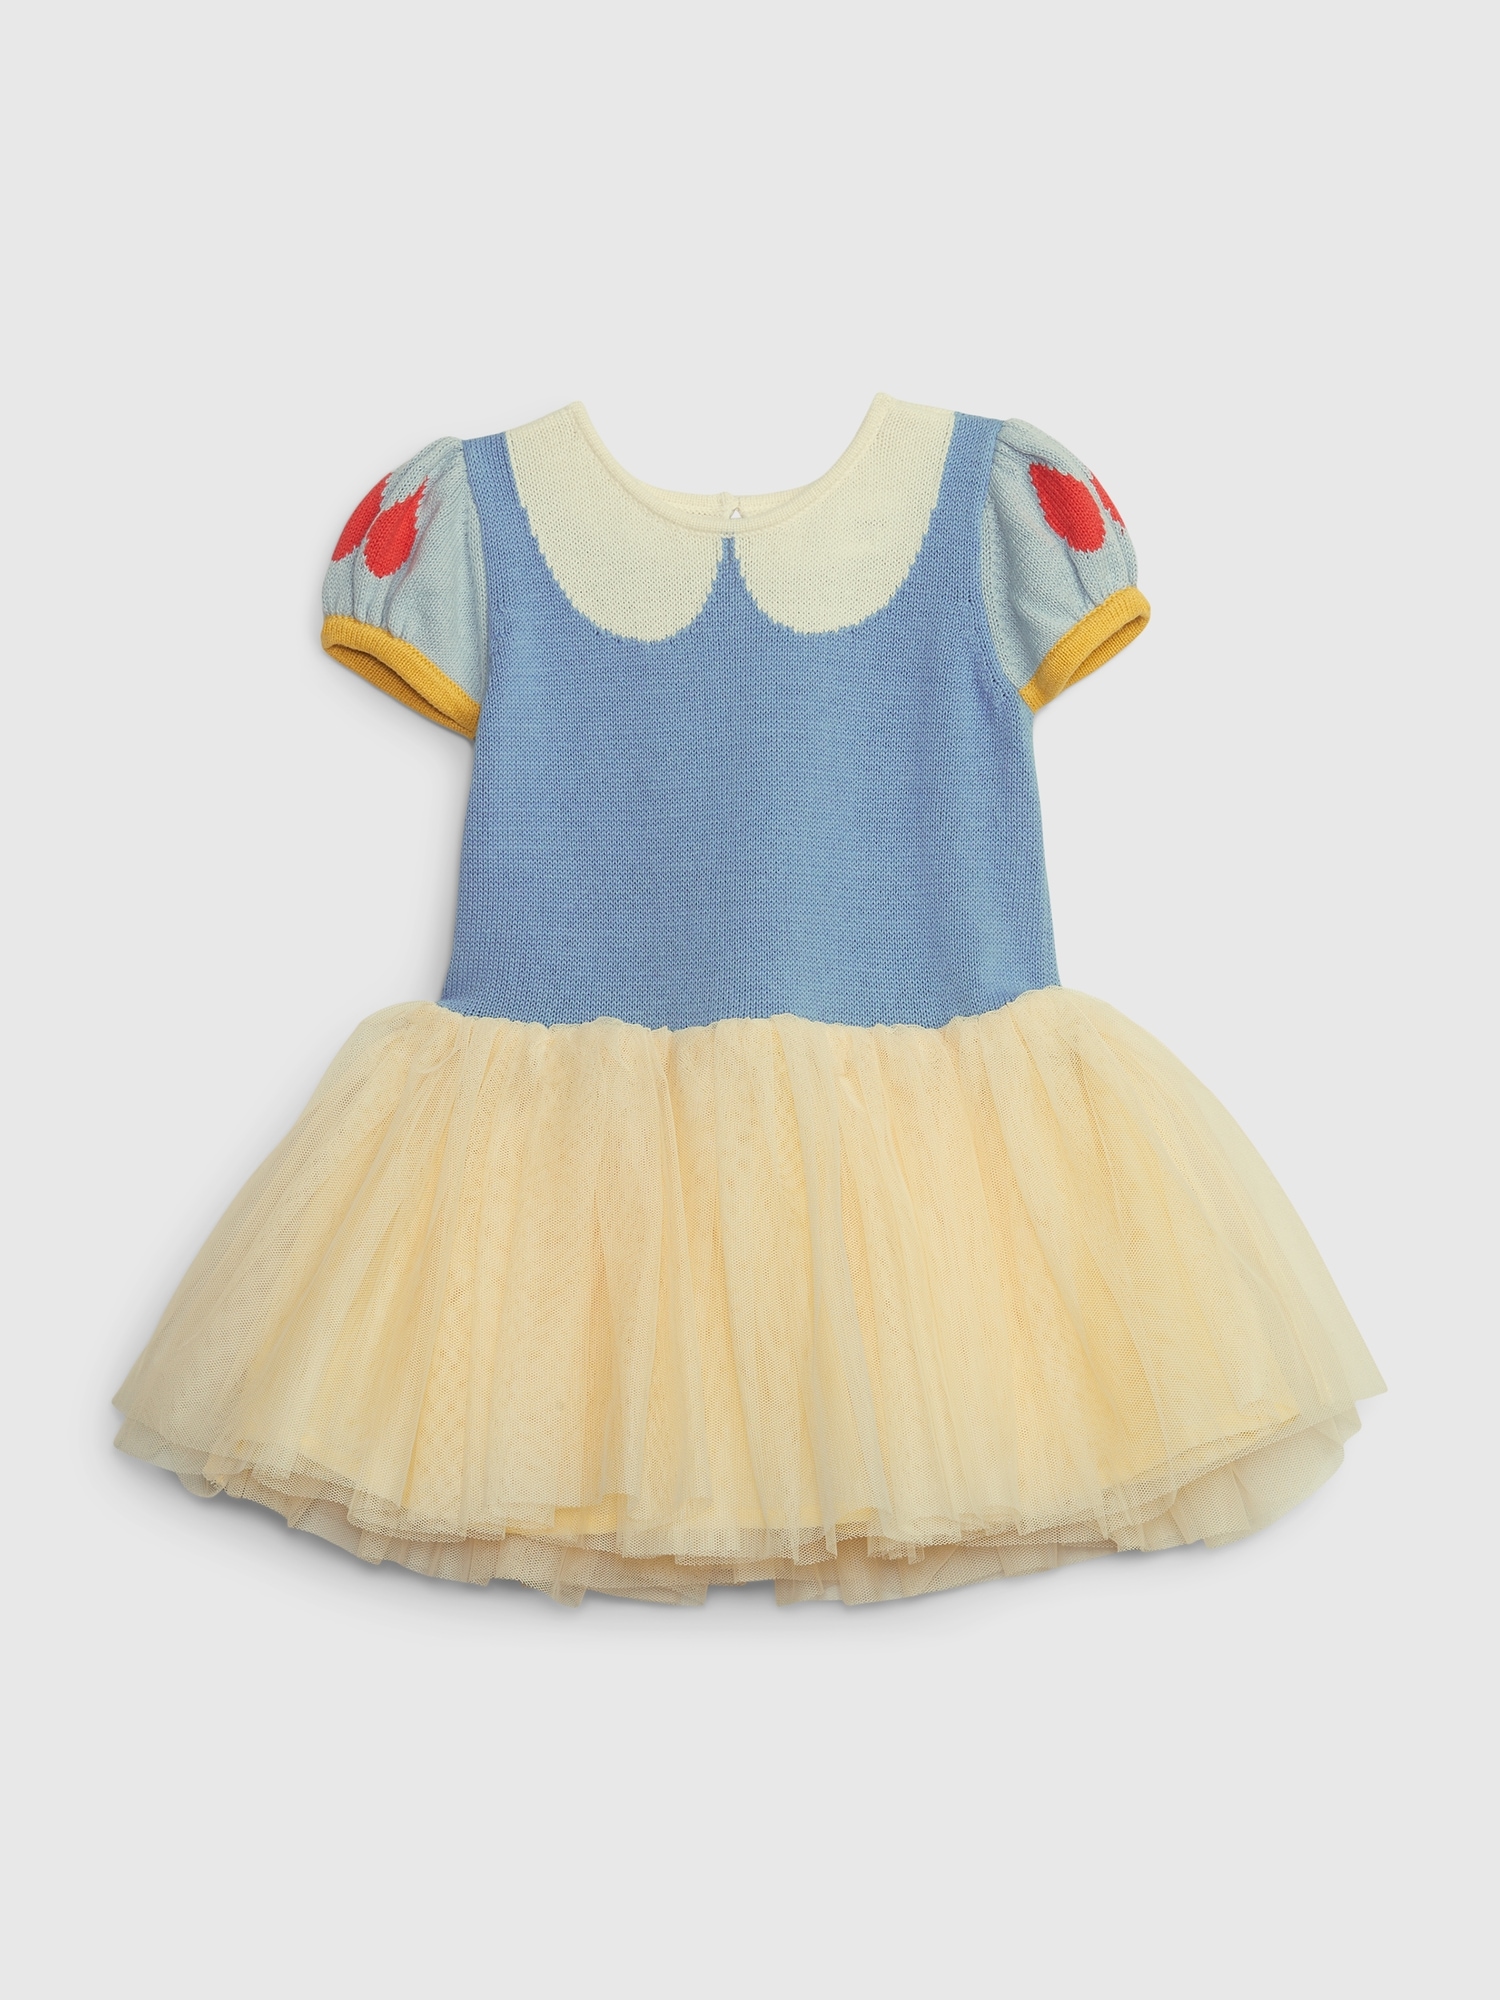 gap infant dresses